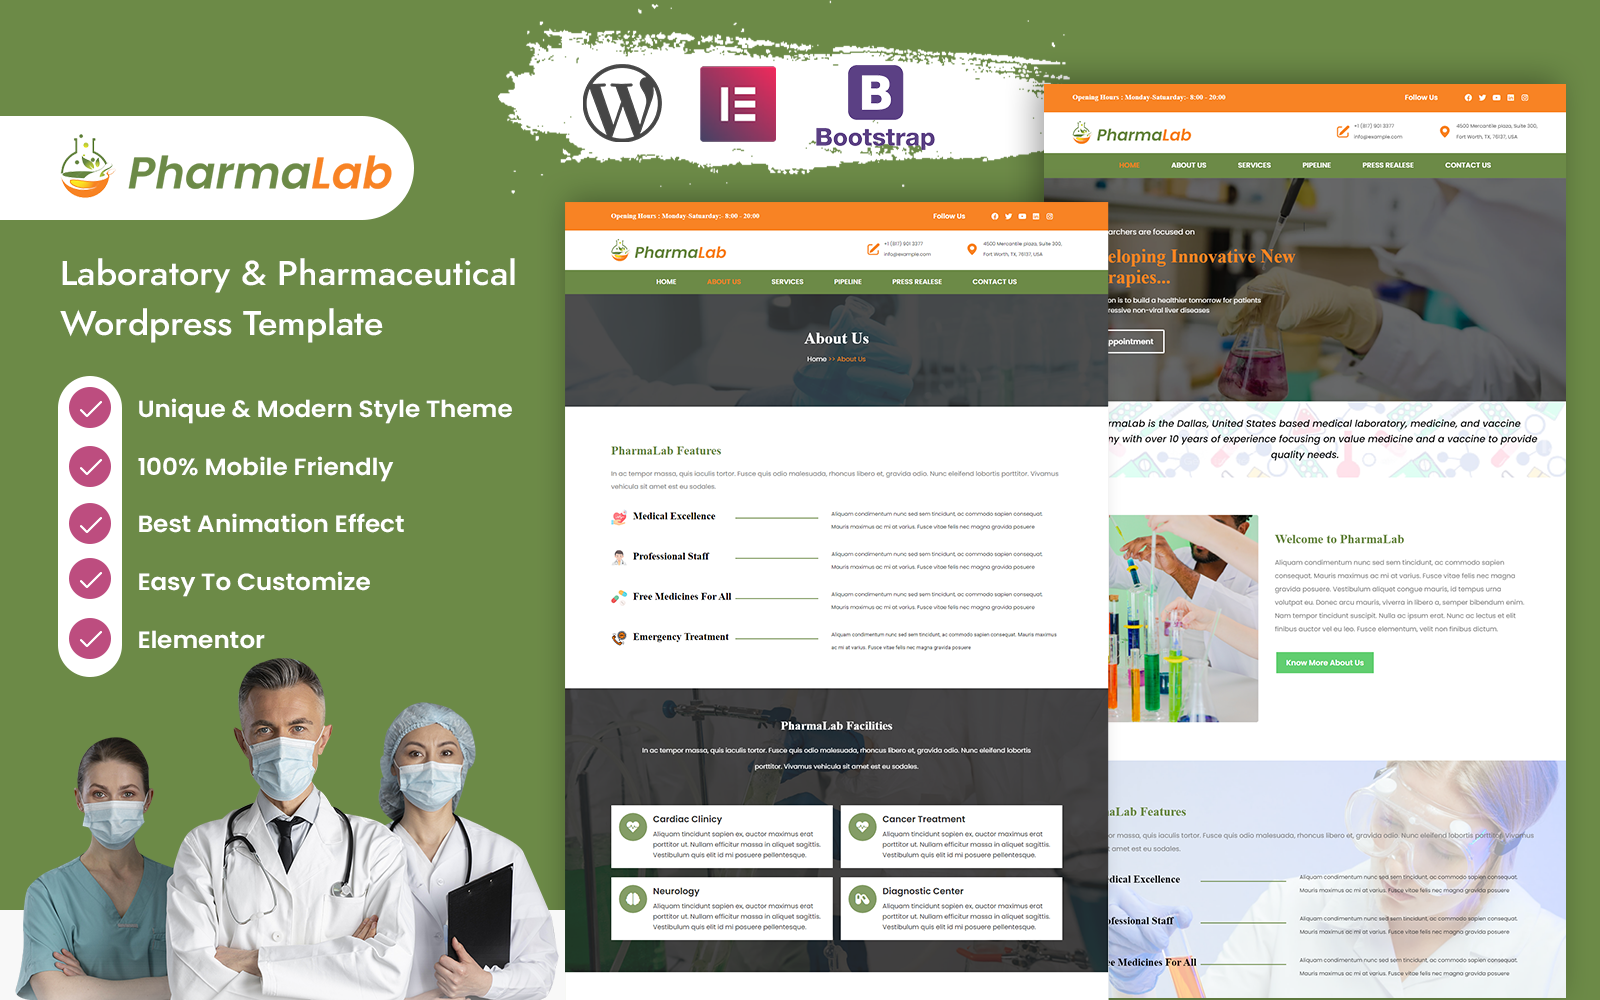 Pharmalab – Laboratory & Pharmaceutical WordPress Template